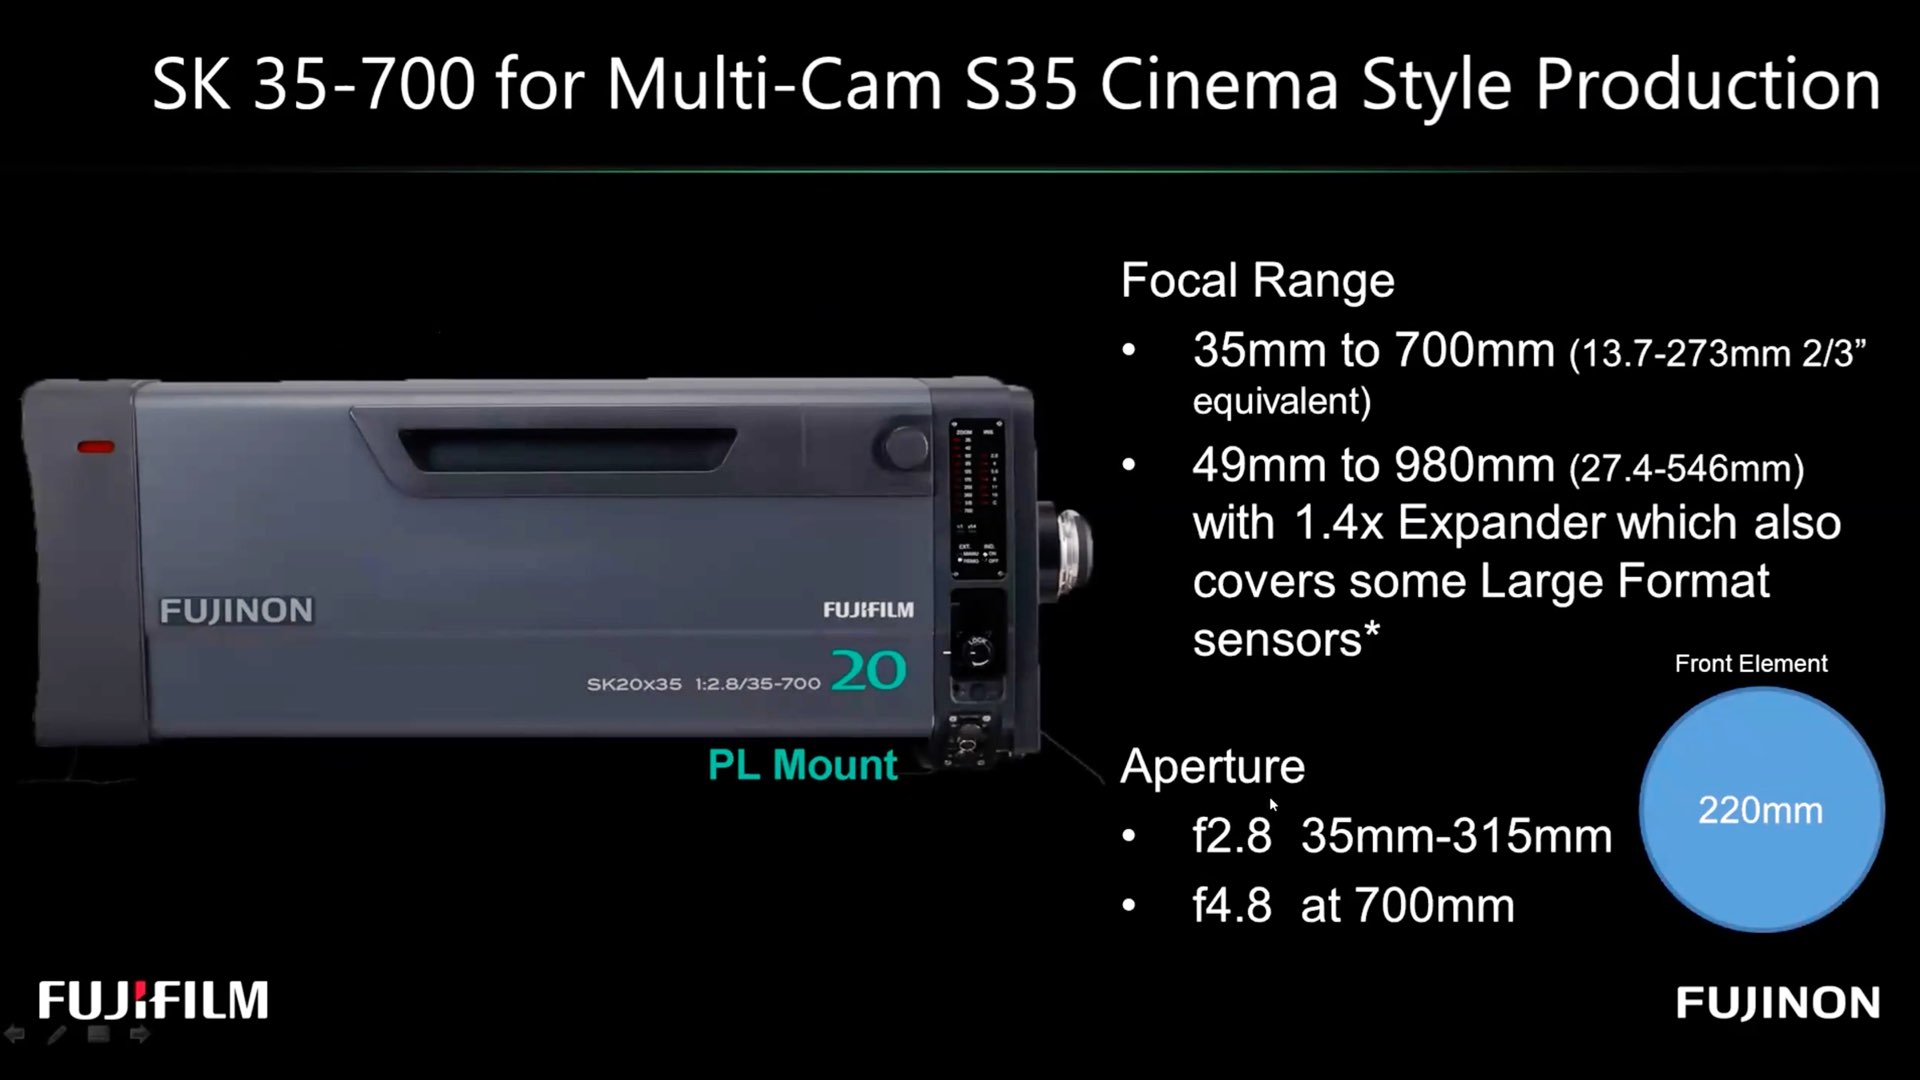 Fujinon SK35-700mm.  Slide from the Digital Cinema Society's Lens 2021 event.